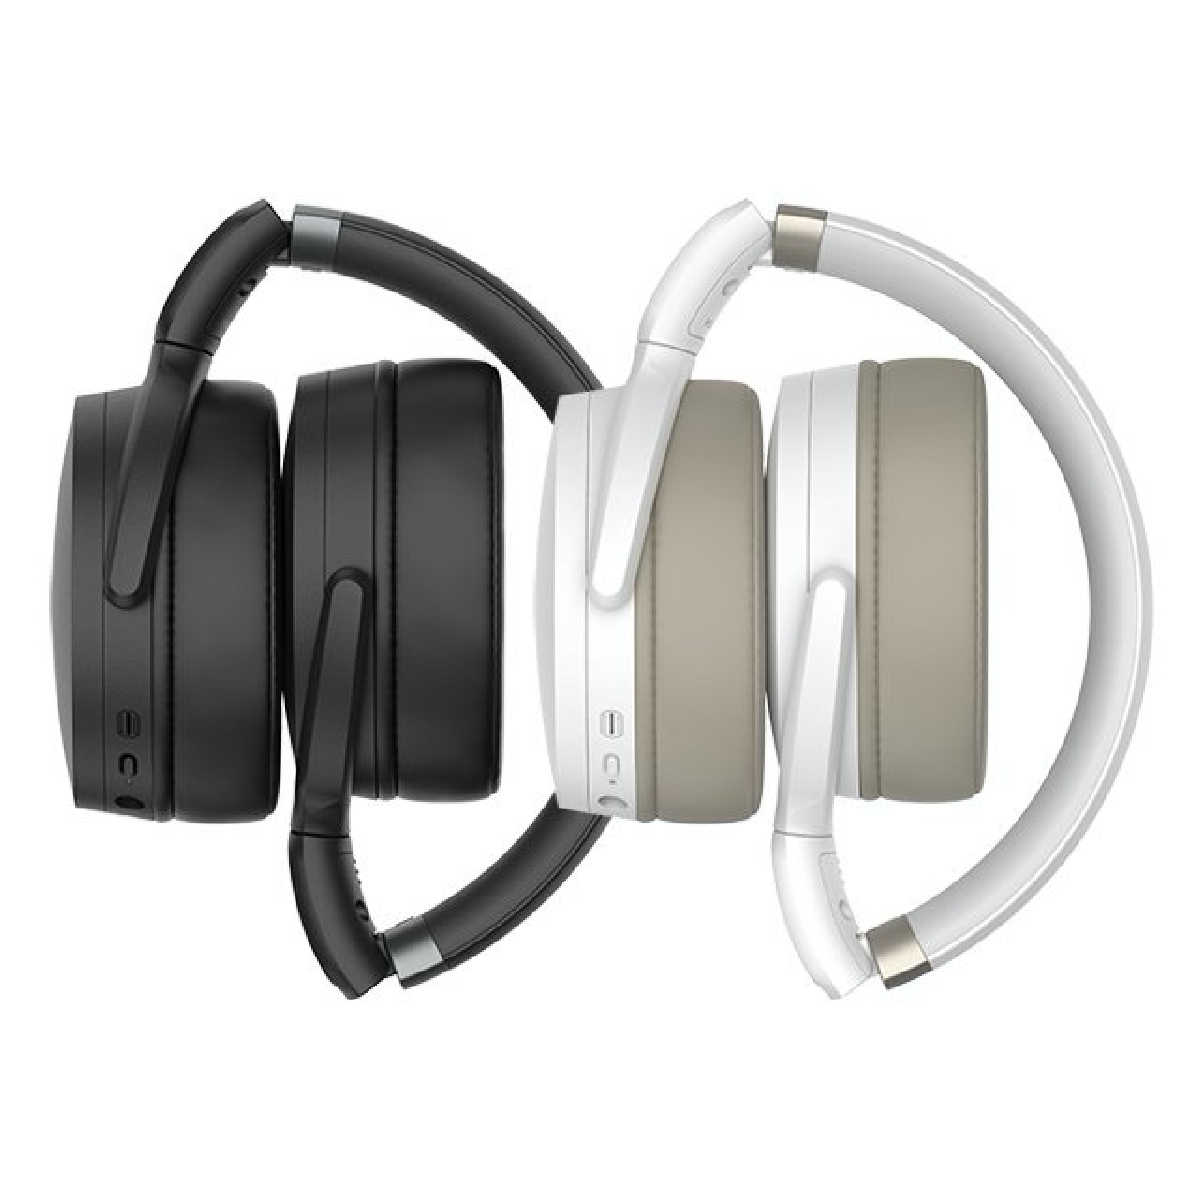 SENNHEISER 森海塞爾 HD450BT  白 ANC主動降噪 無線耳罩式耳機 | My Ear耳機專門店